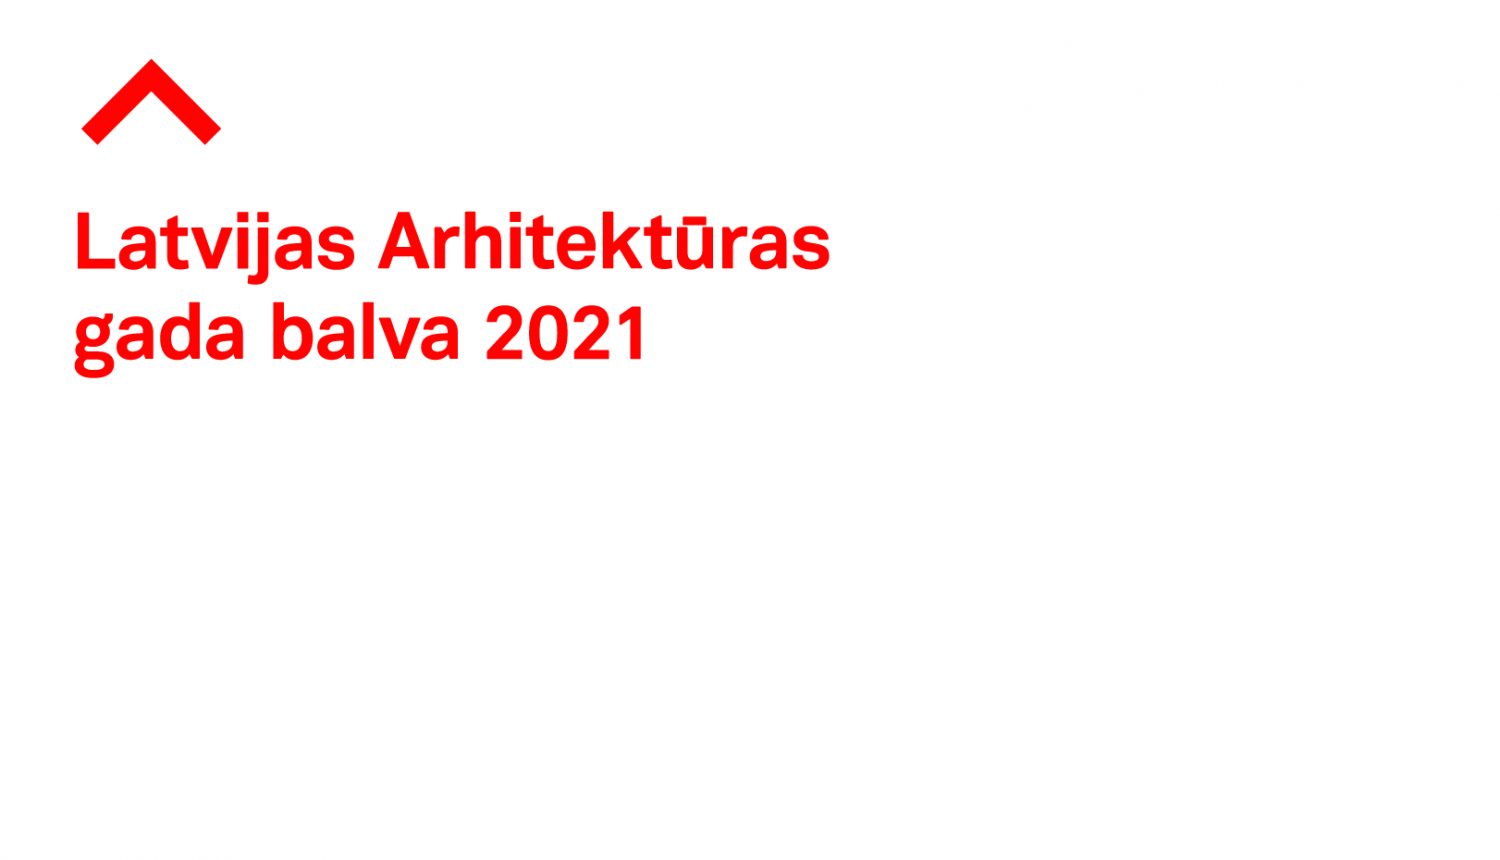 Latvijas Arhitektūras gada balvas logo.